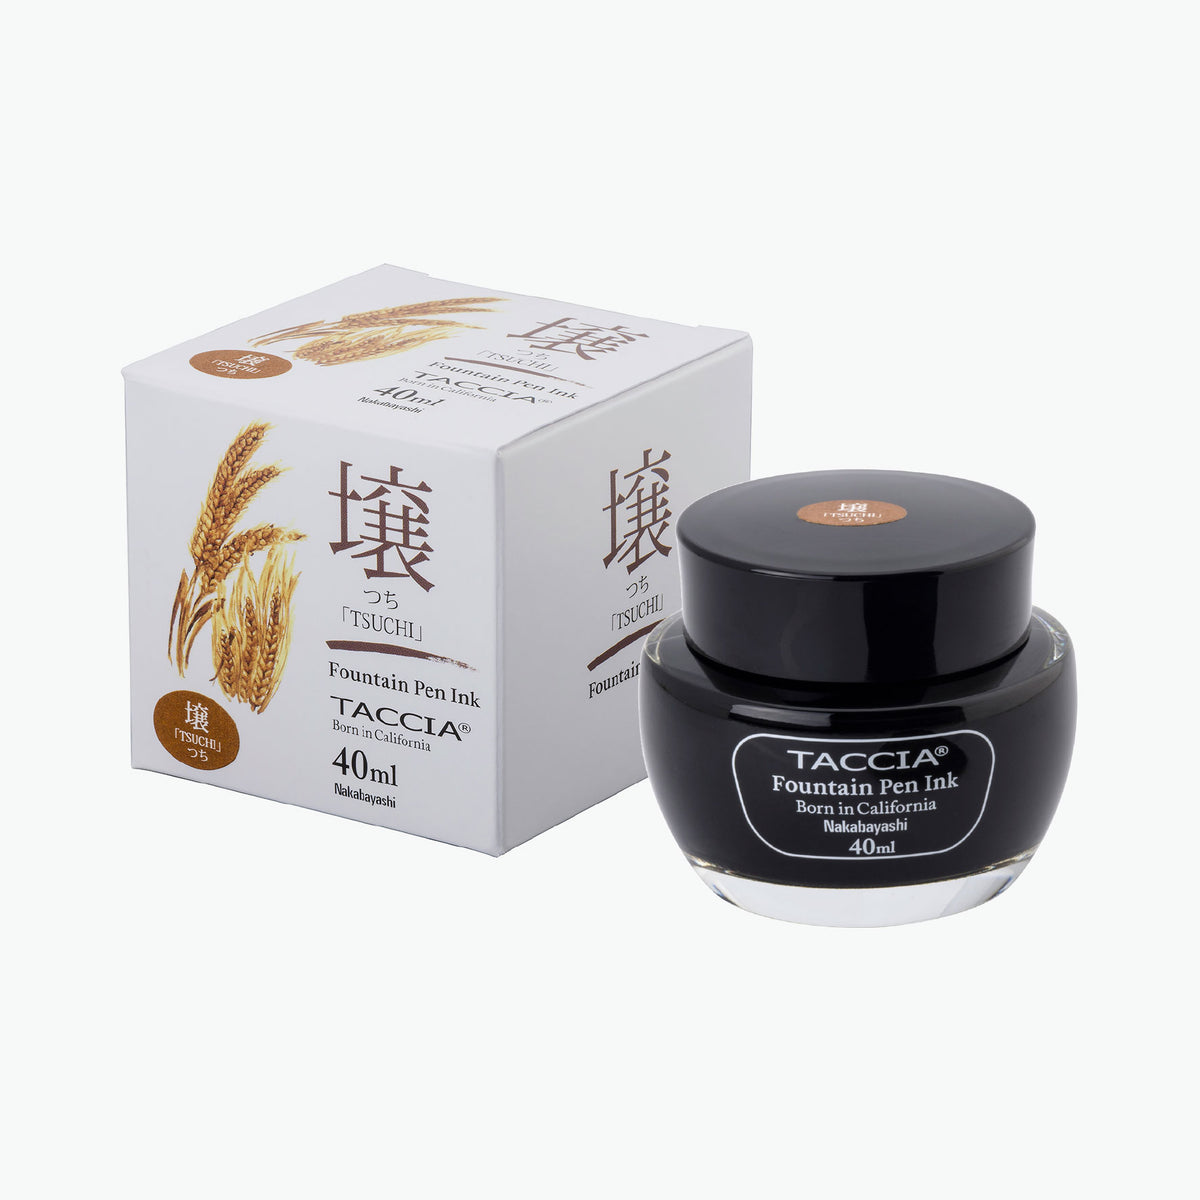 Taccia - Fountain Pen Ink - Standard - Tsuchi (Golden Wheat)